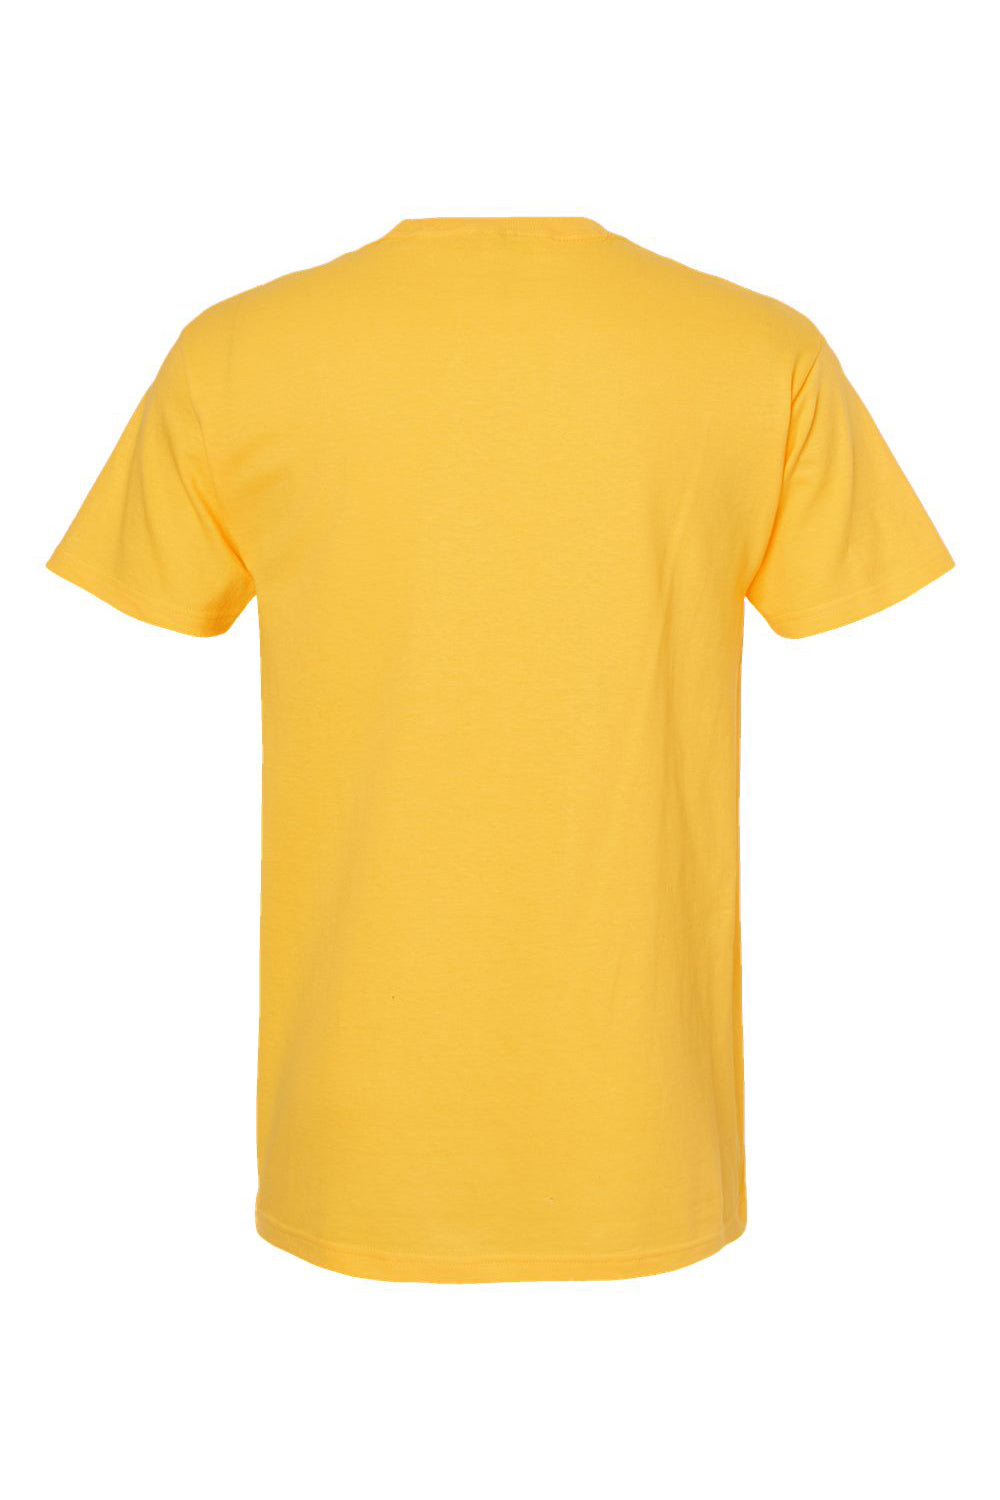 M&O 4800 Mens Gold Soft Touch Short Sleeve Crewneck T-Shirt Yellow Flat Back